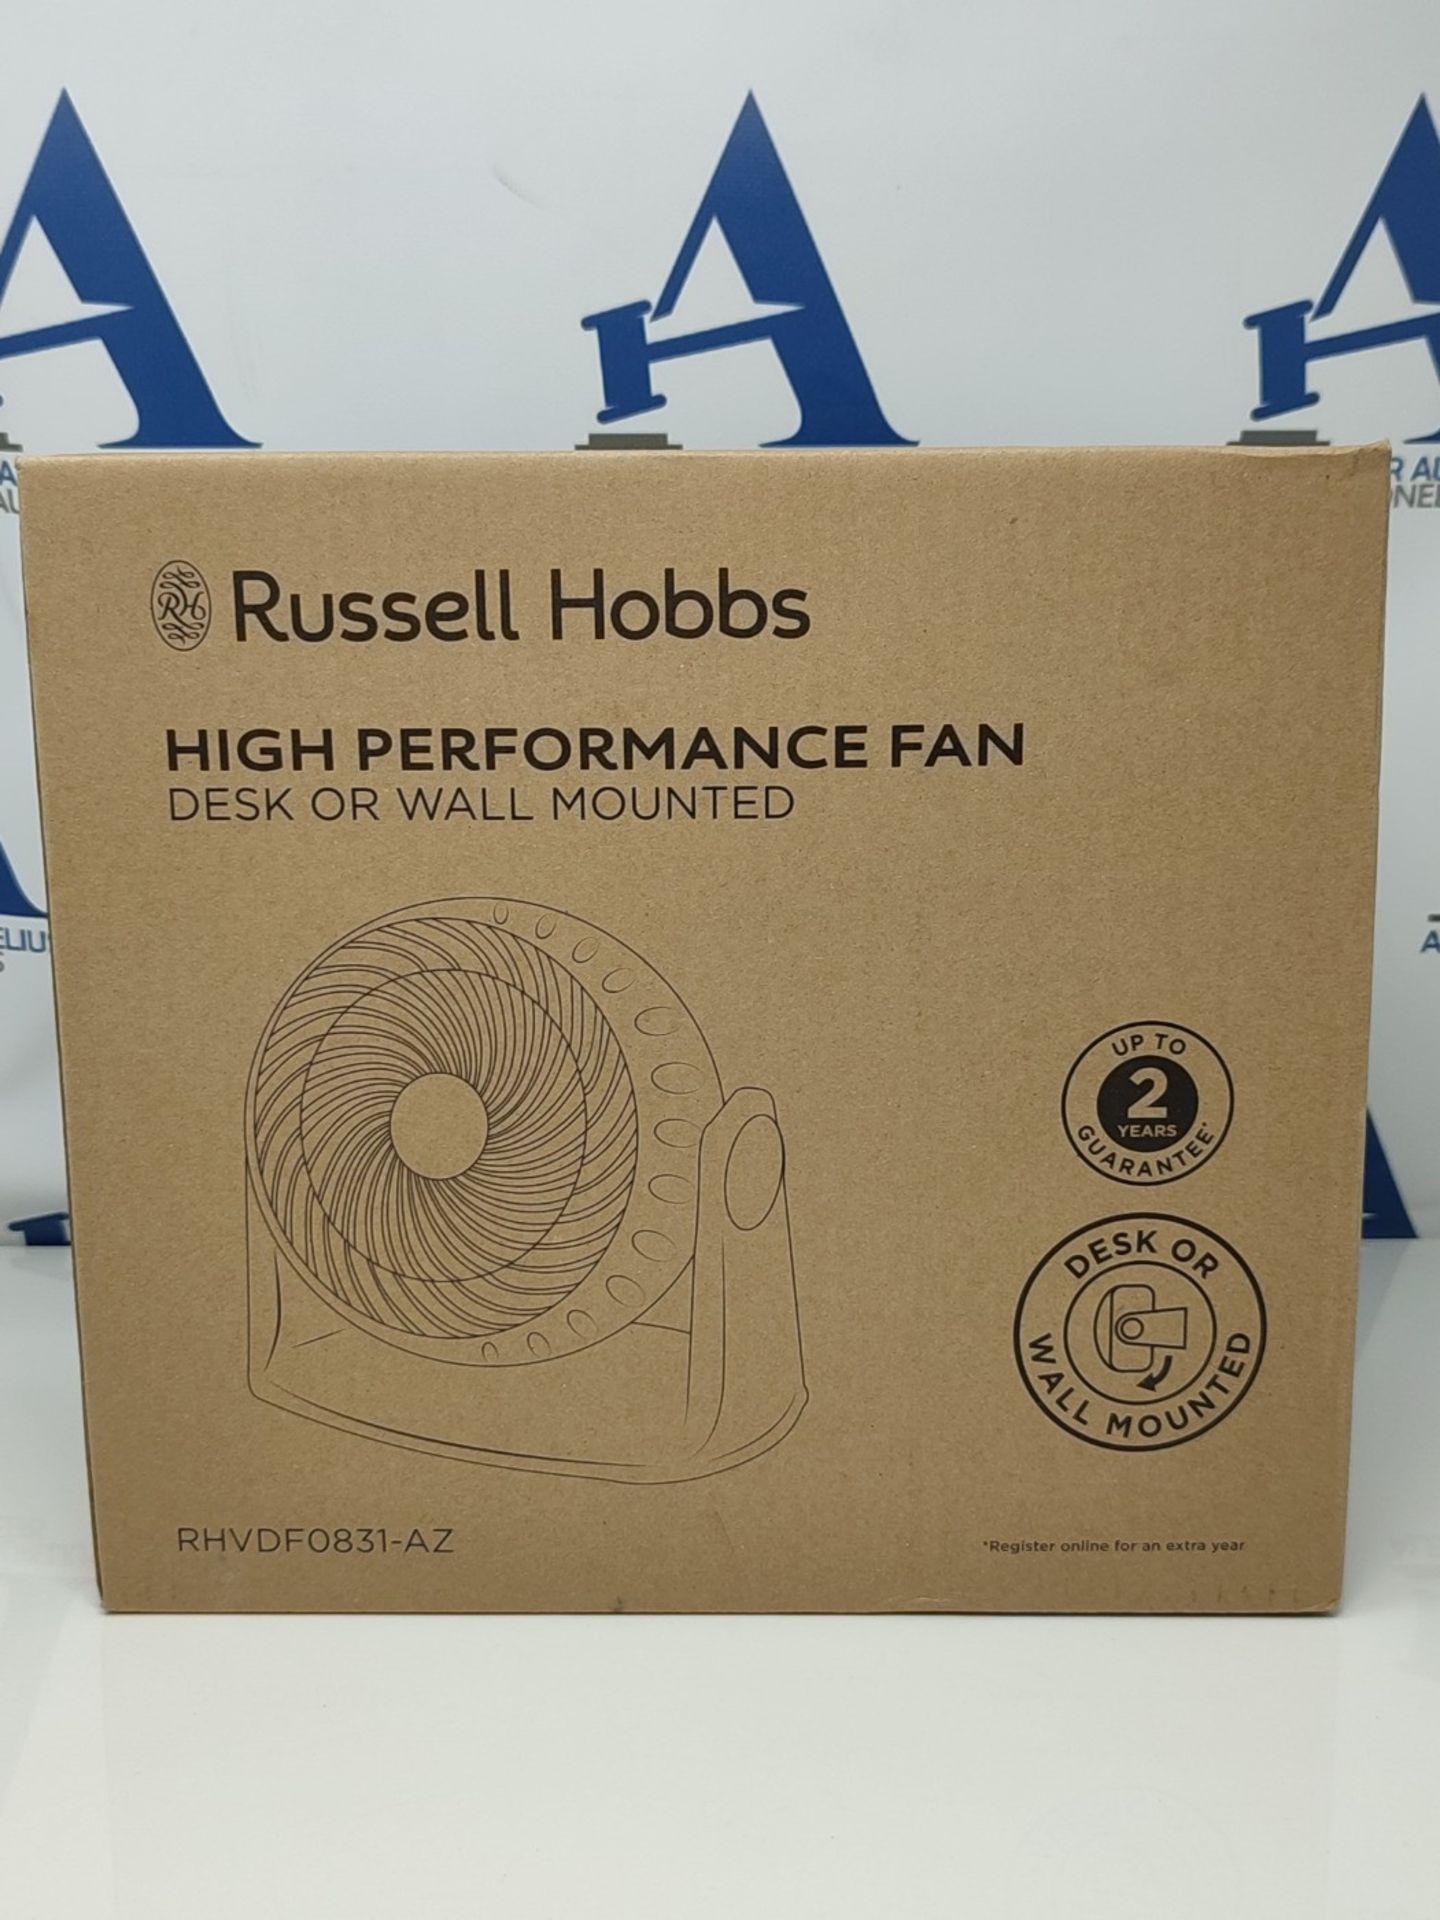 Russell Hobbs 8" high Velocity Plastic Freestanding/Wall Mounted Desk Fan RHVD0831, Wh - Image 2 of 3